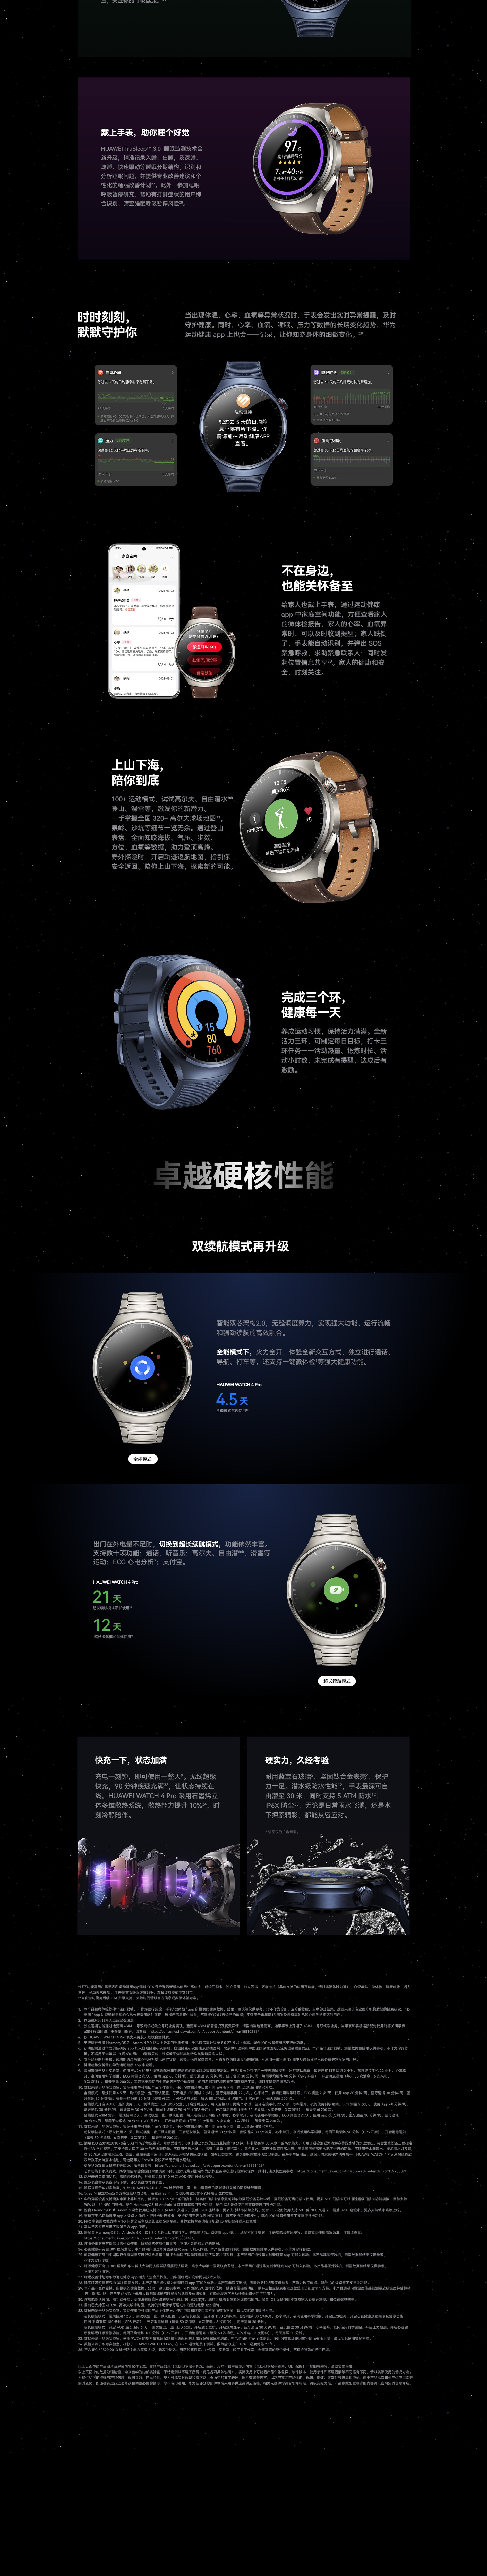 Pro Watch HarmonyOS 4 Huawei Smartwatch